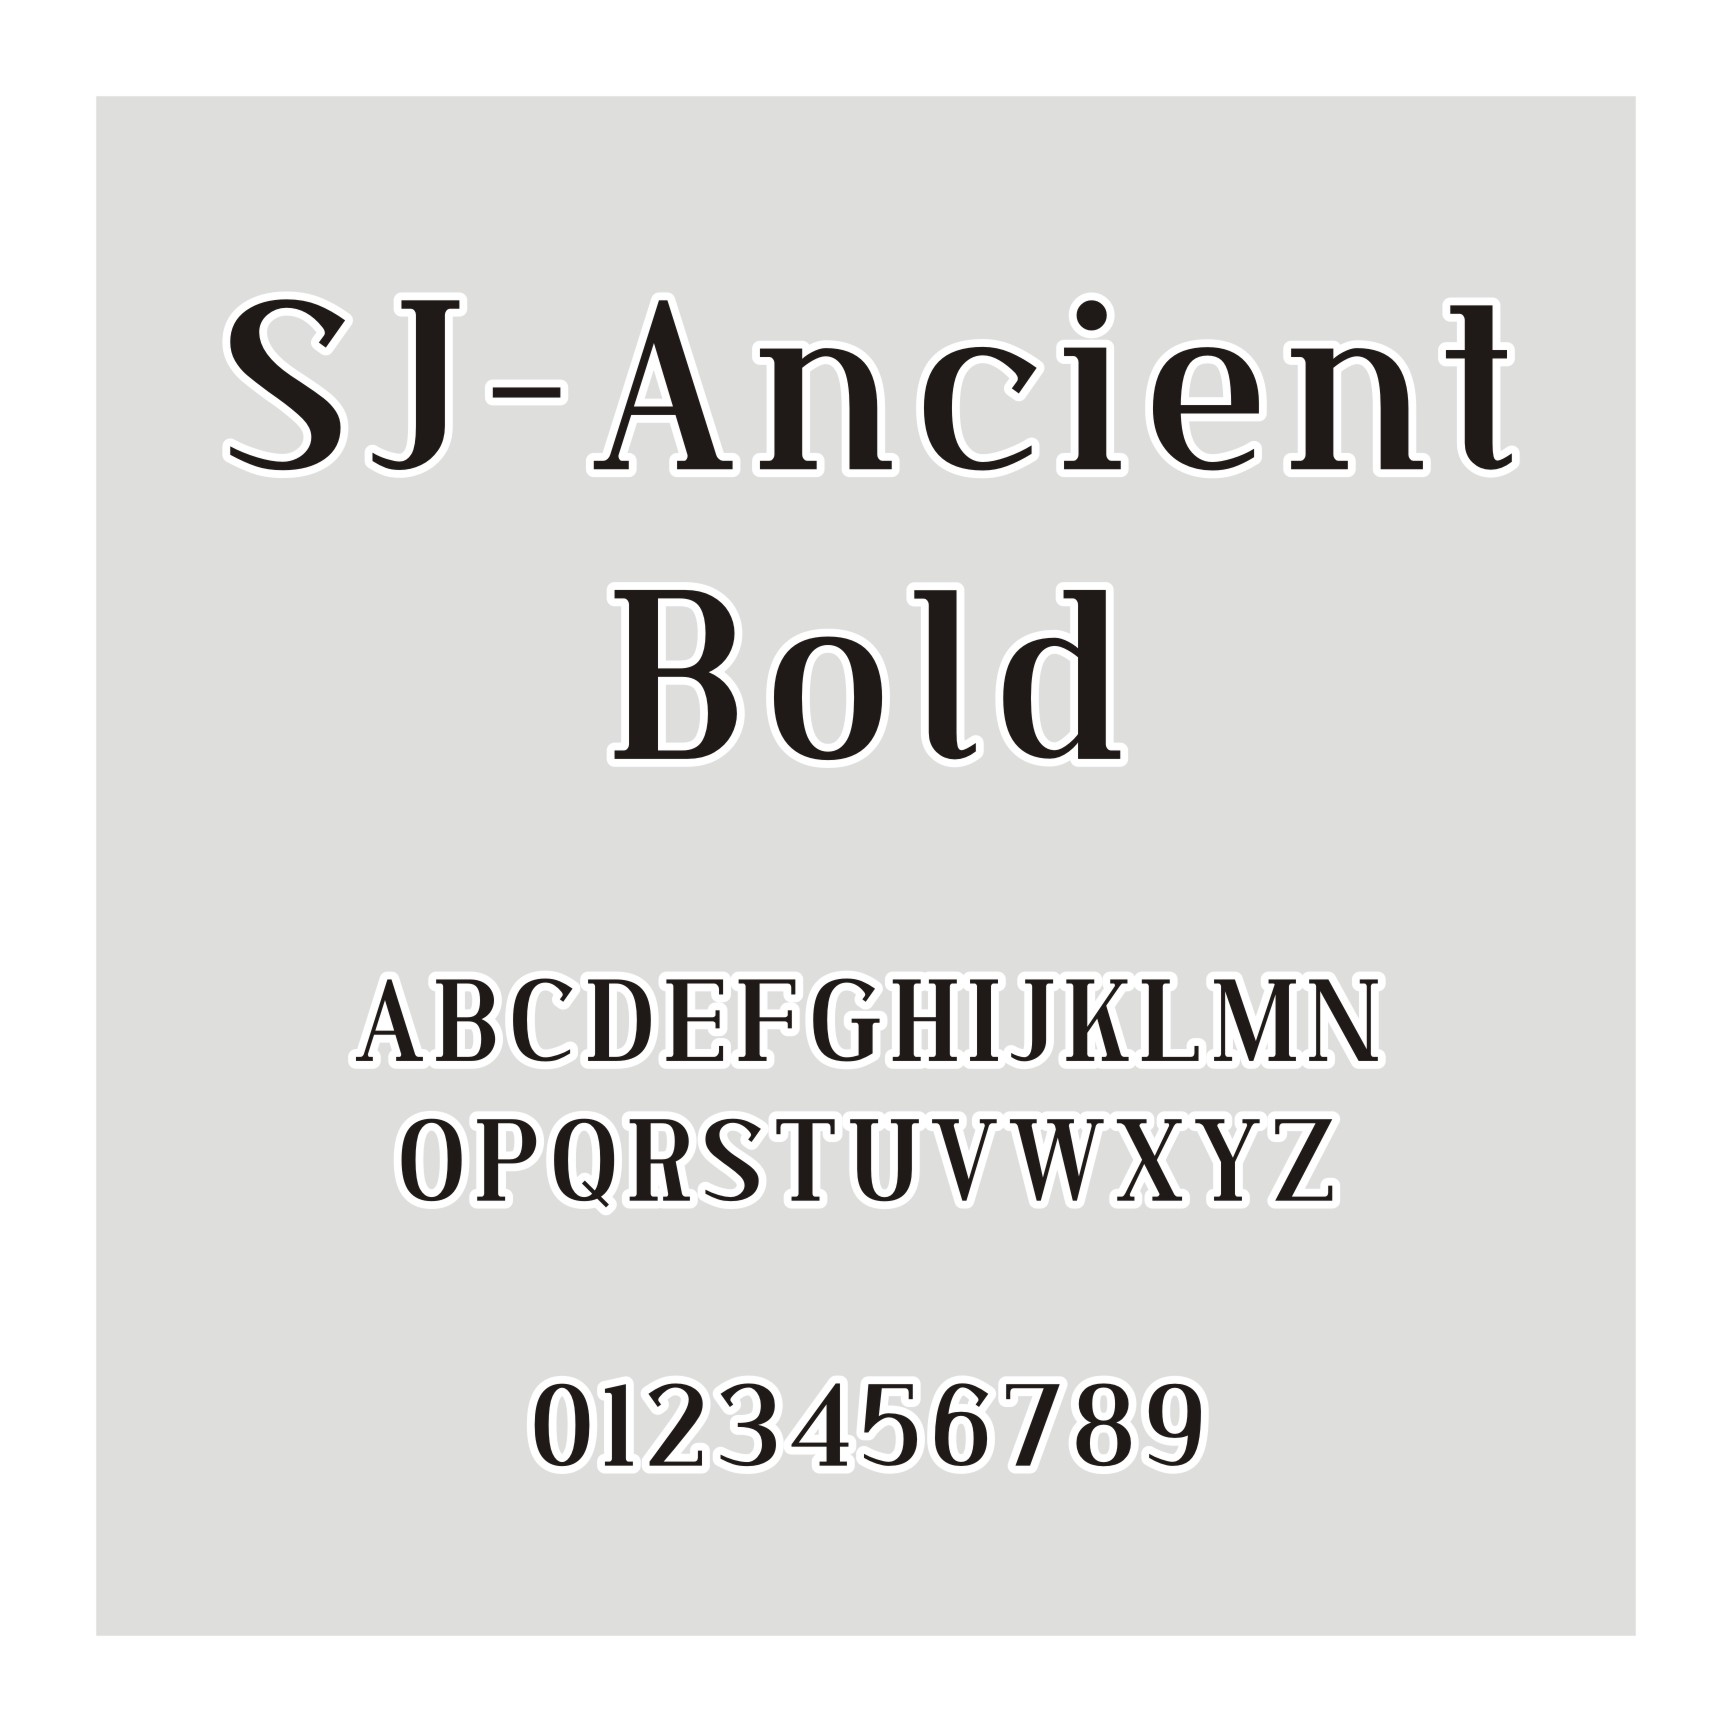 SJ-Ancient Bold